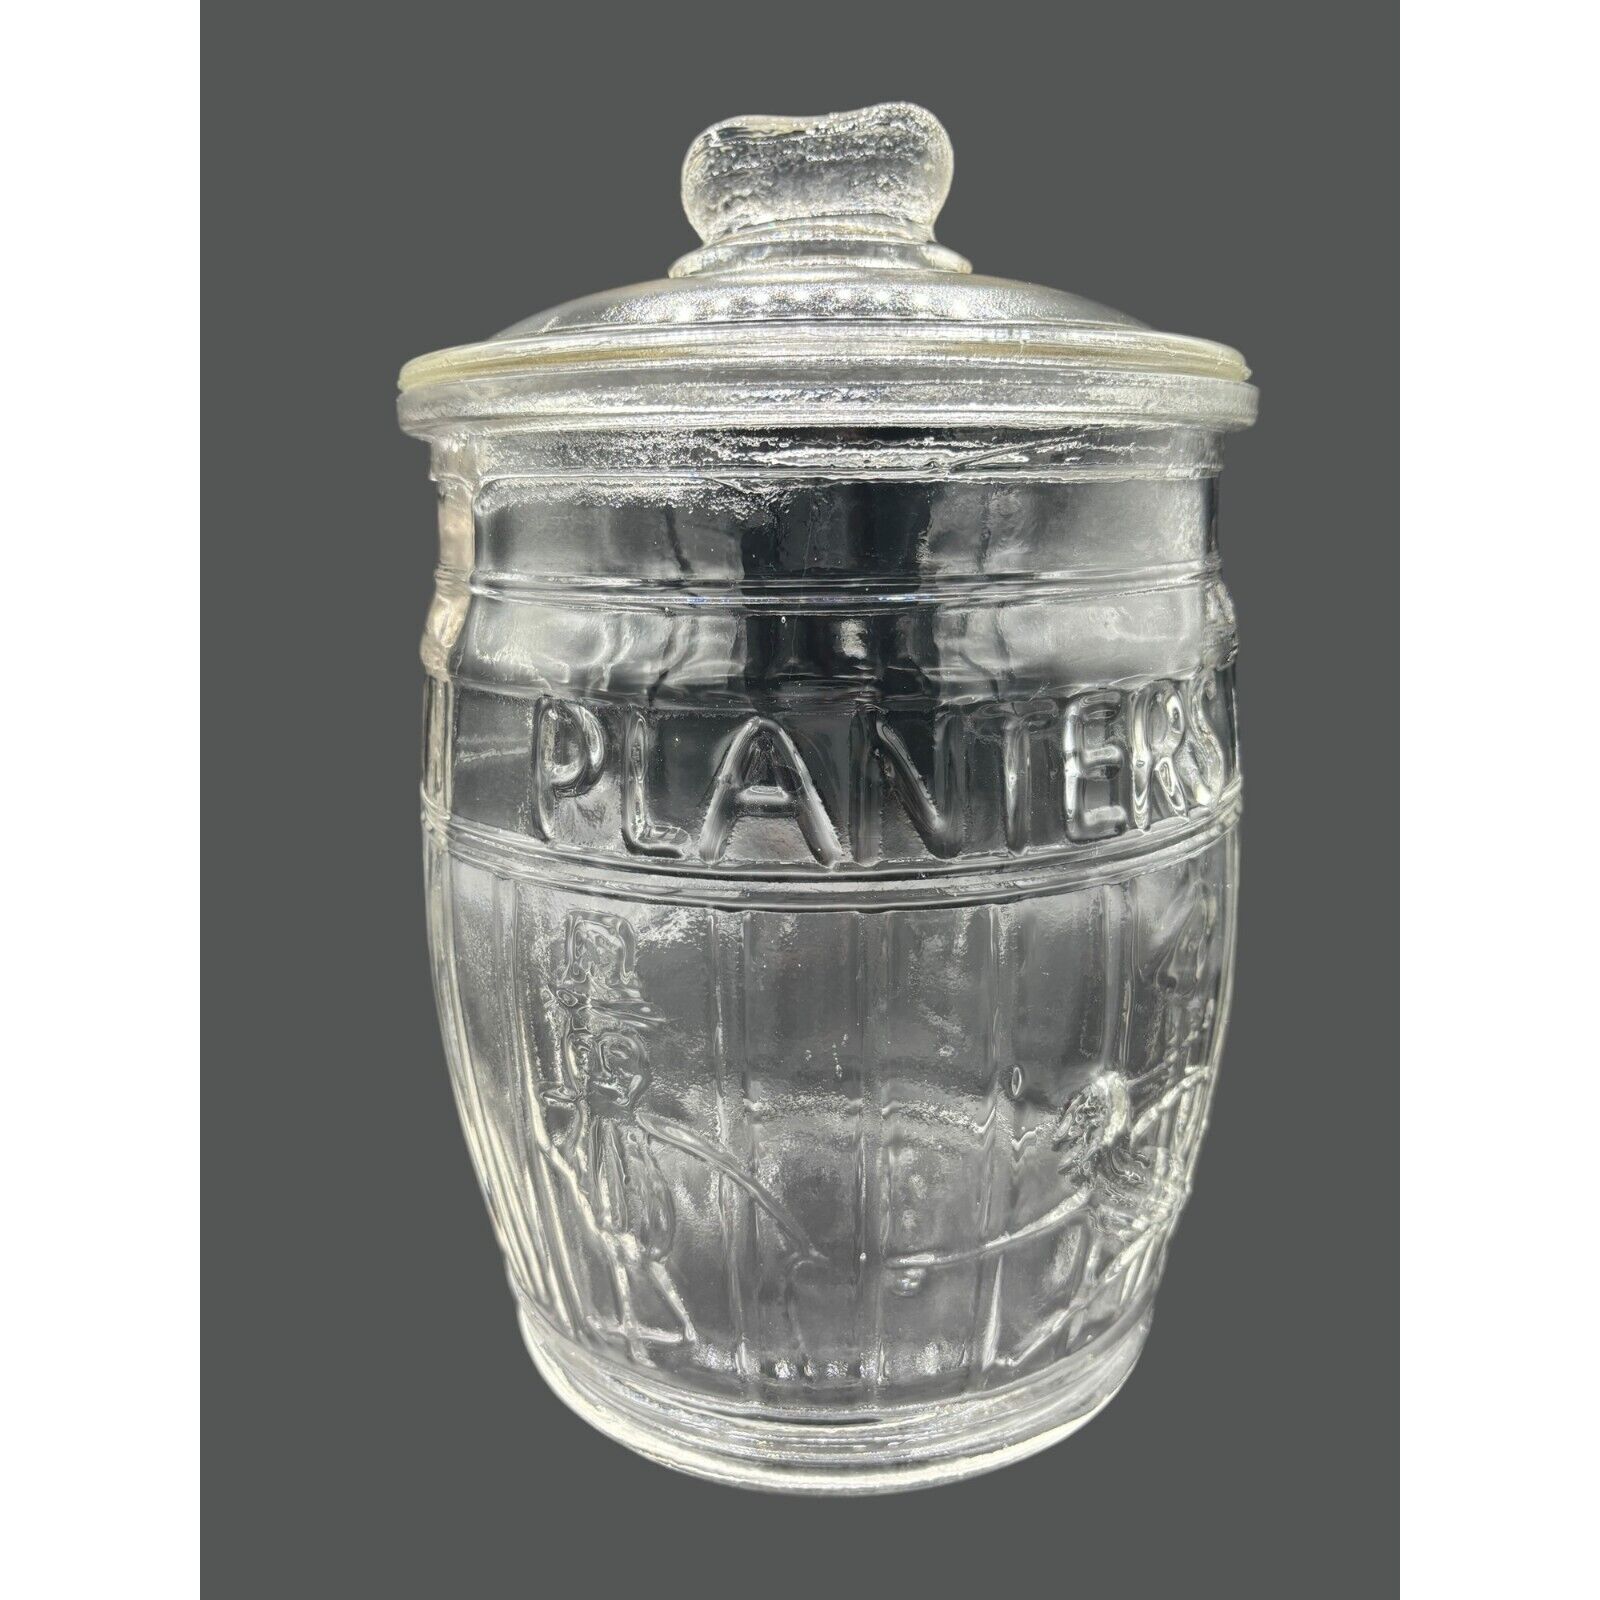 Vintage Planters Peanuts Mr. Peanut Clear Glass Barrel Lidded Jar Canister Cooki